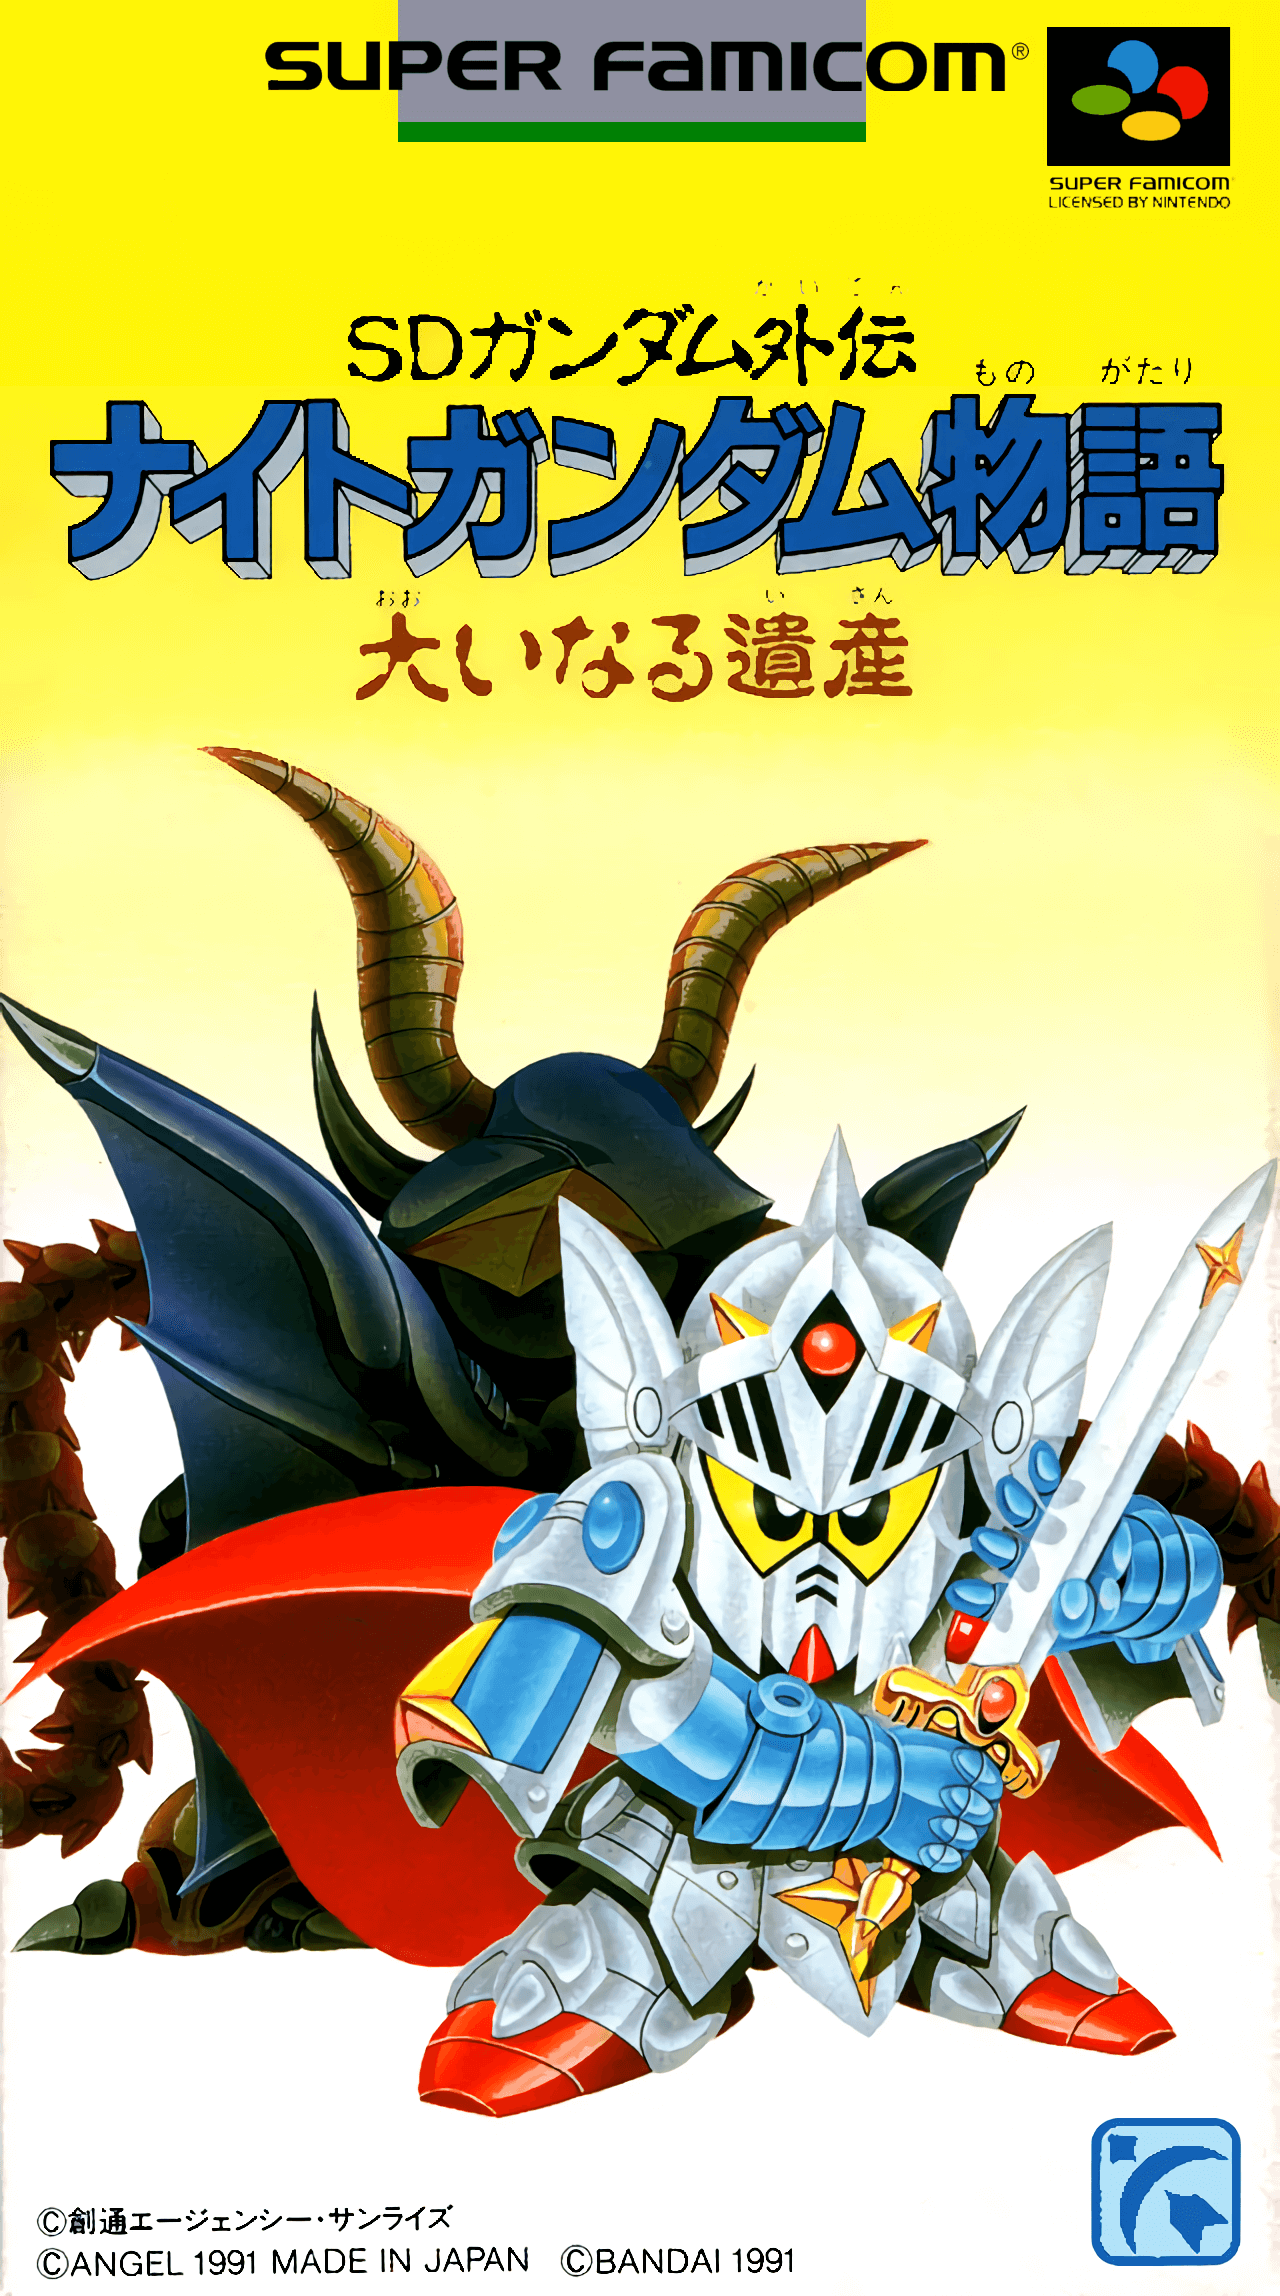 SD Gundam Gaiden: Knight Gundam Monogatari: Ooinaru Isan